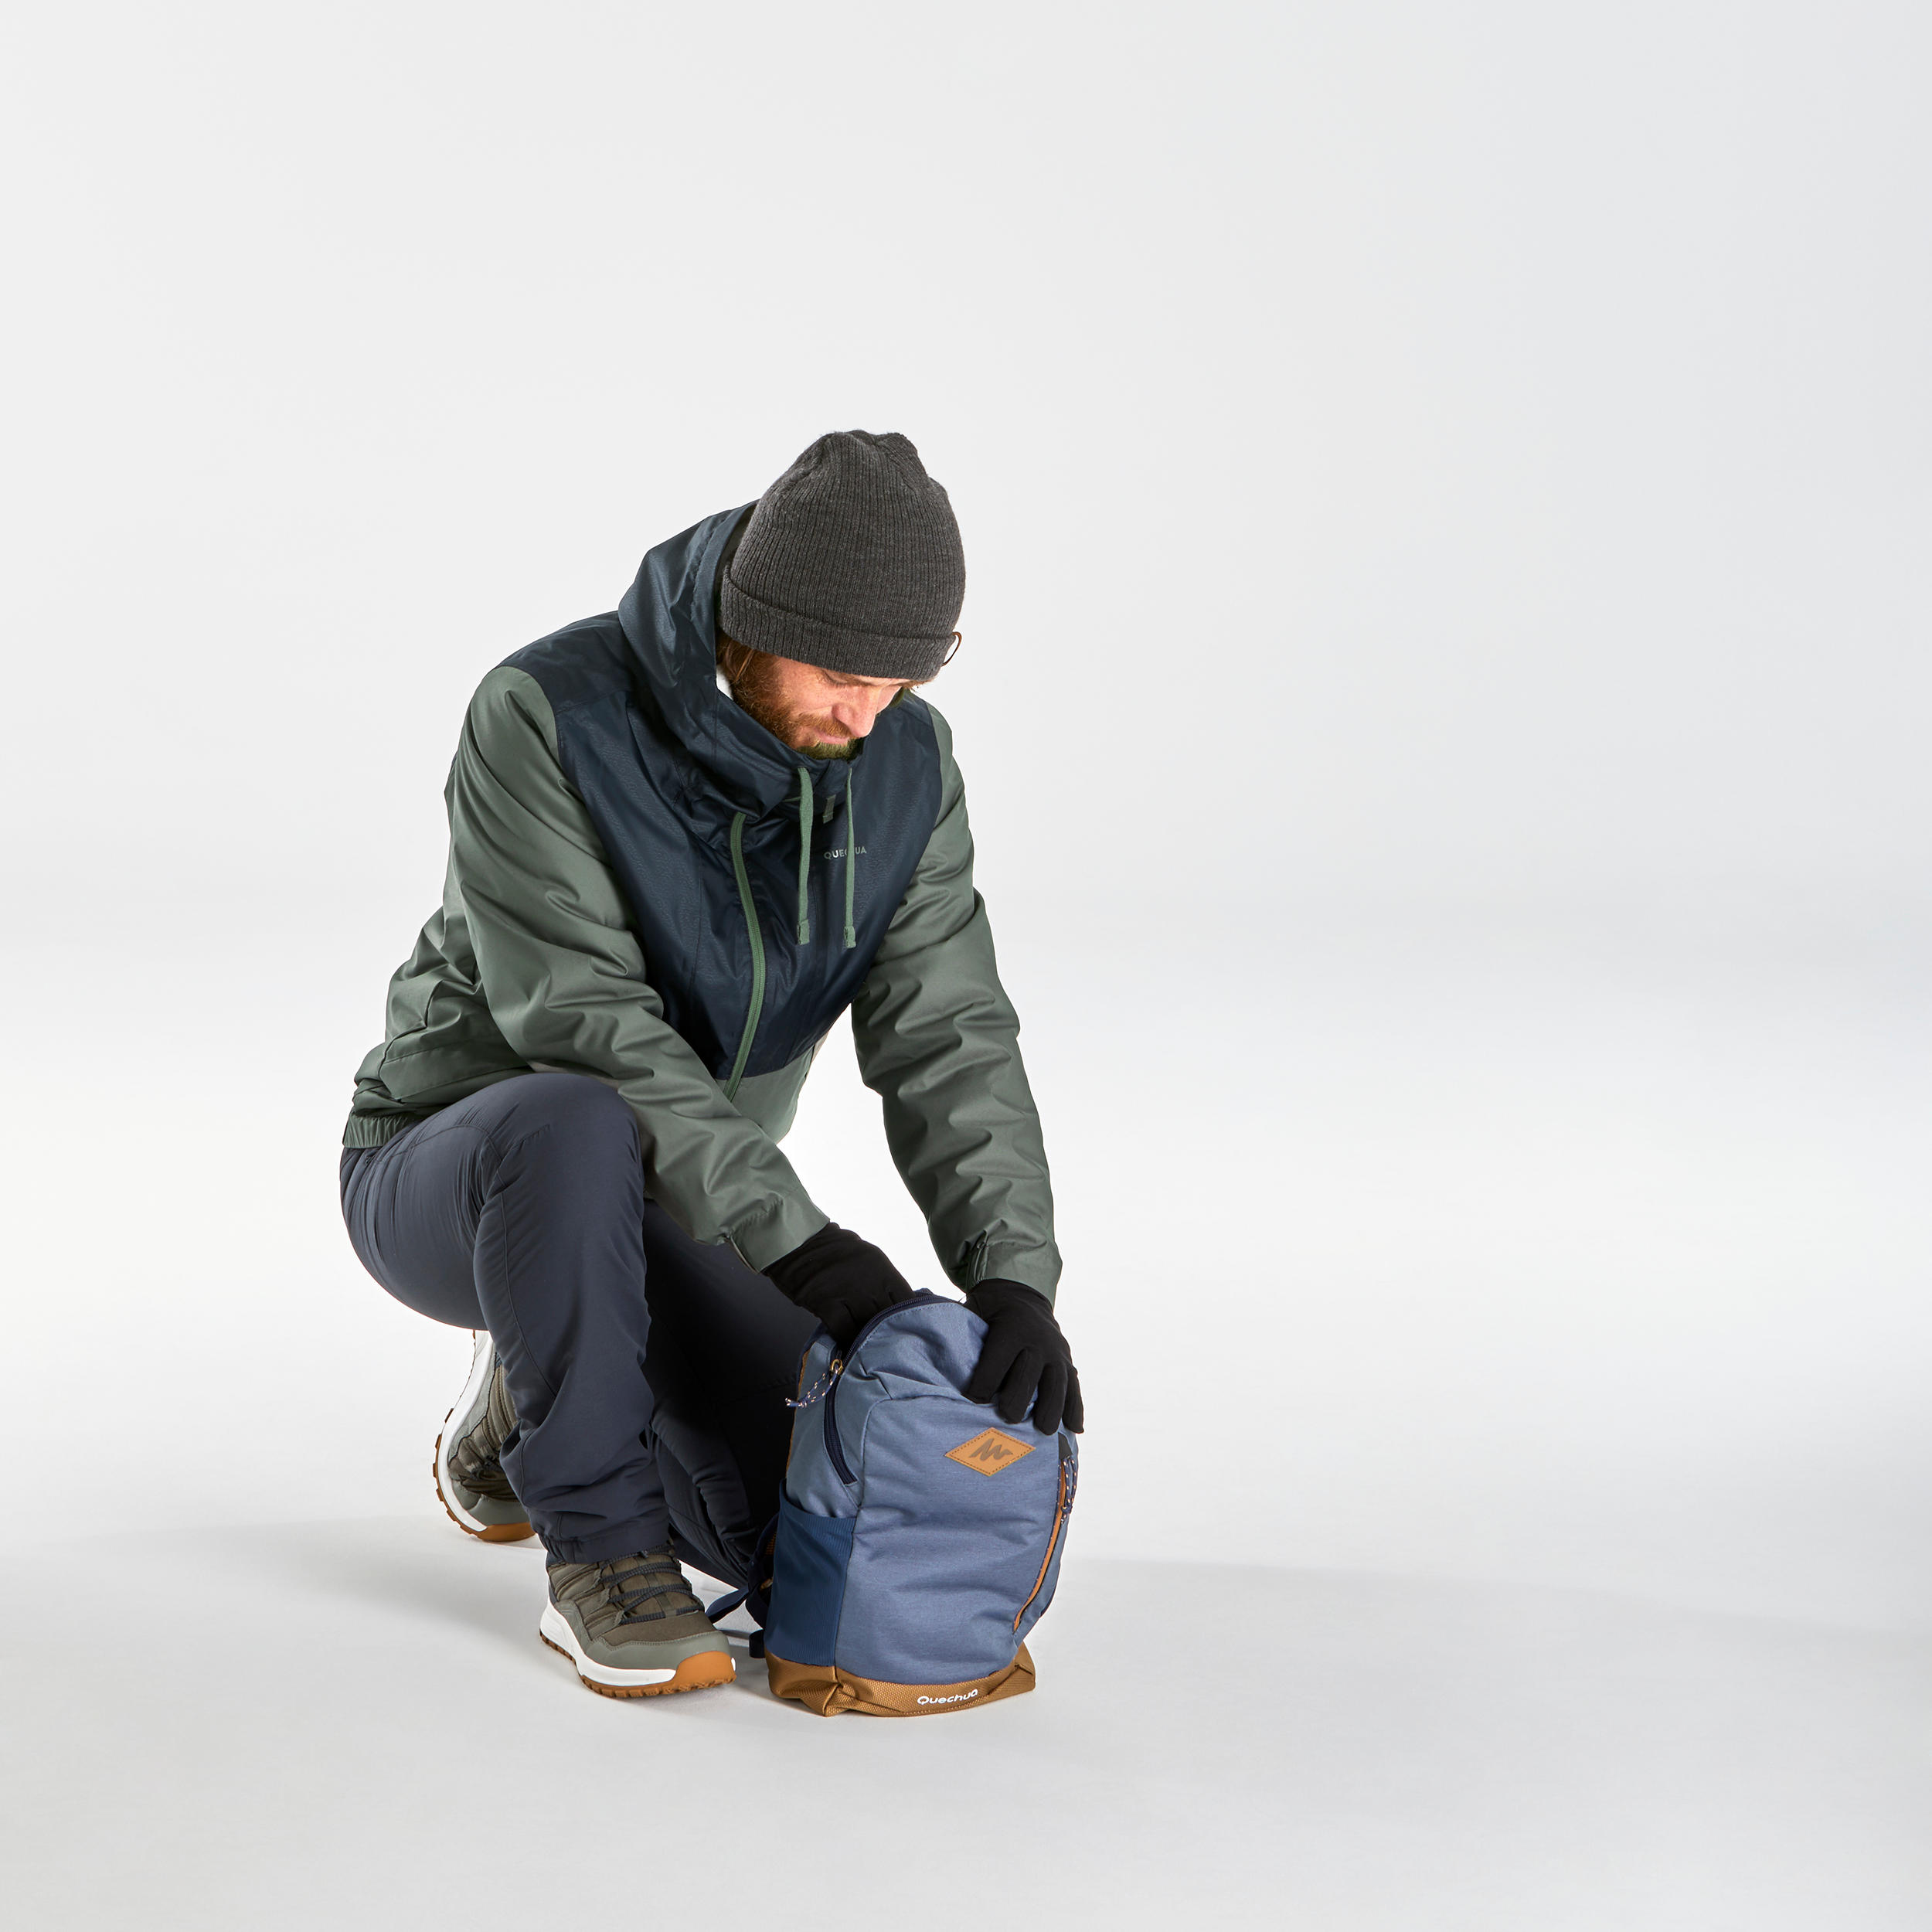 Men’s hiking waterproof winter jacket - SH100 -5°C 9/11